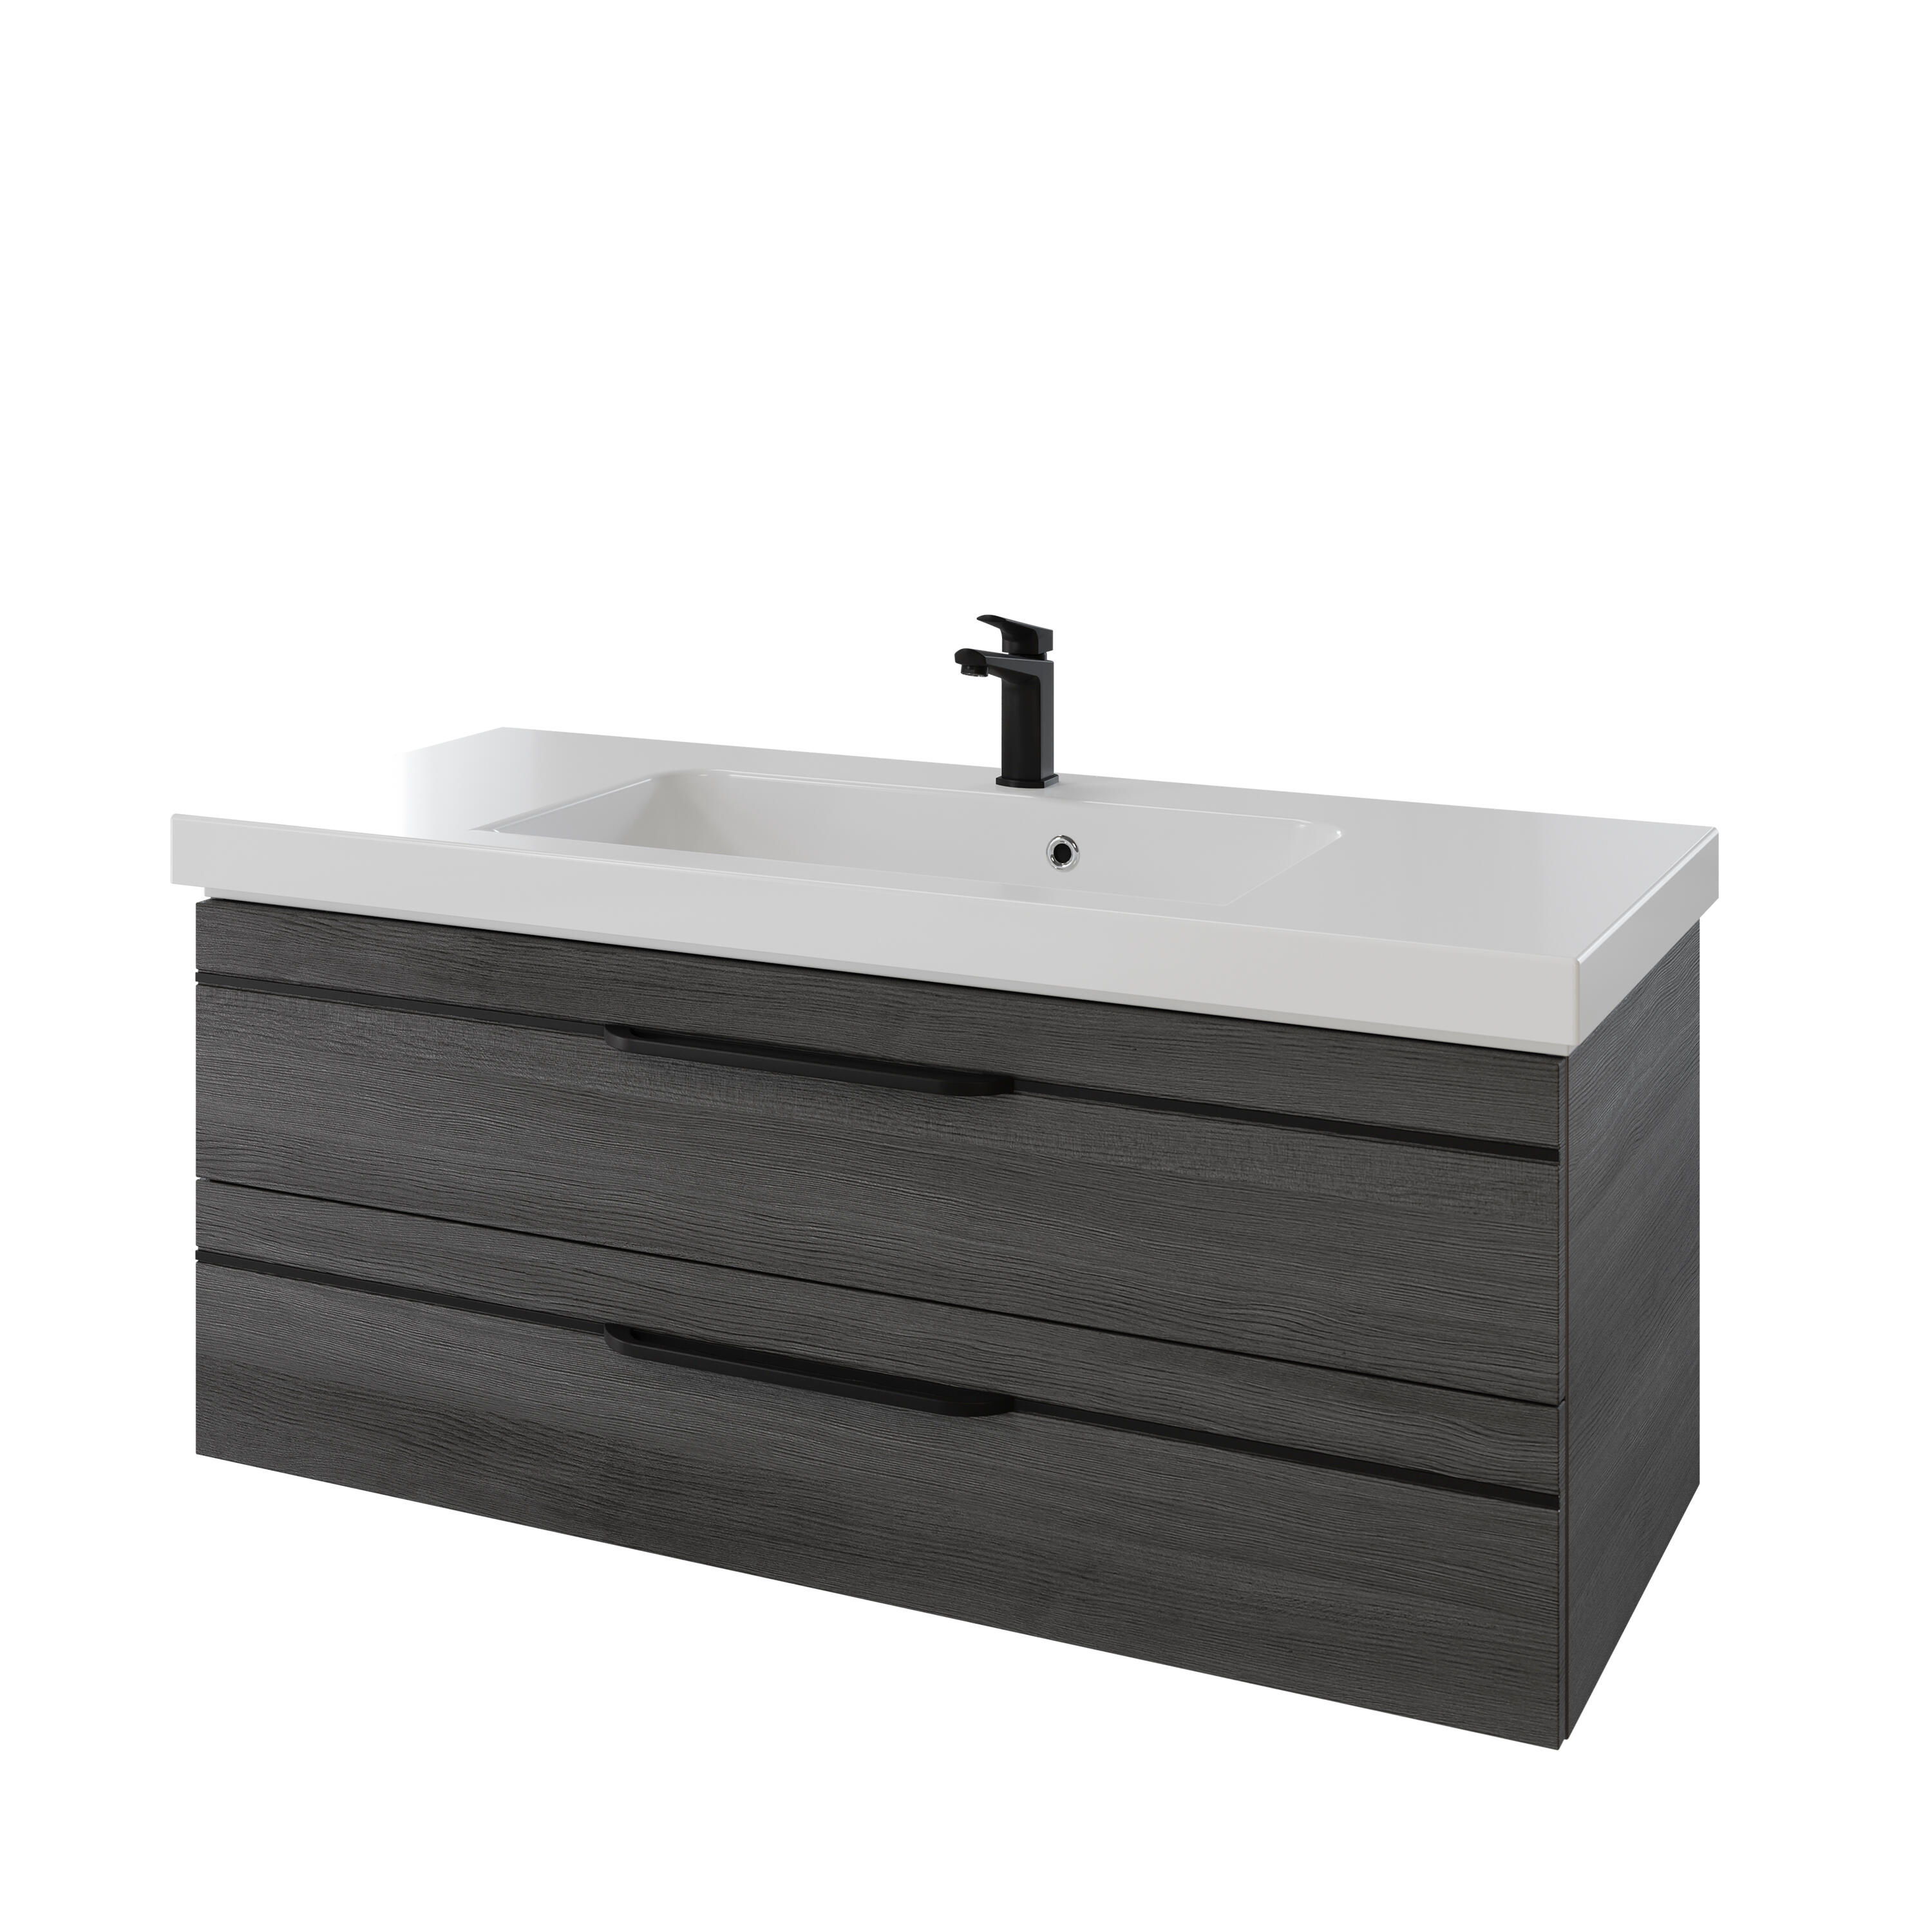 Mueble de baño con lavabo balto grafito 120x49 cm